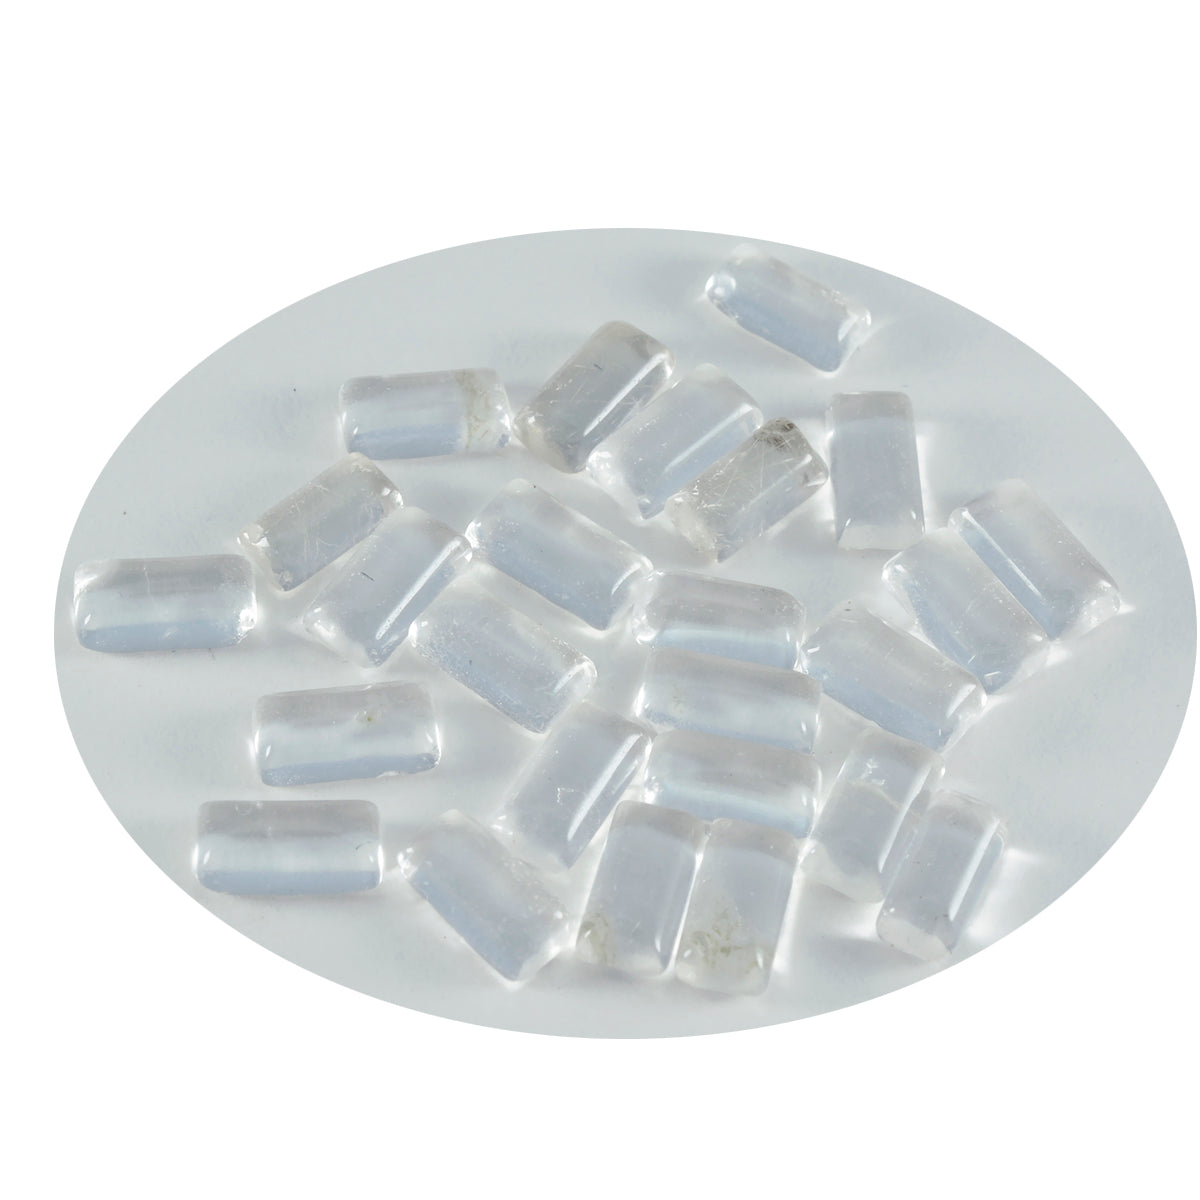 Riyogems 1PC White Crystal Quartz Cabochon 3x6 mm Baguett Shape AAA Quality Loose Gem